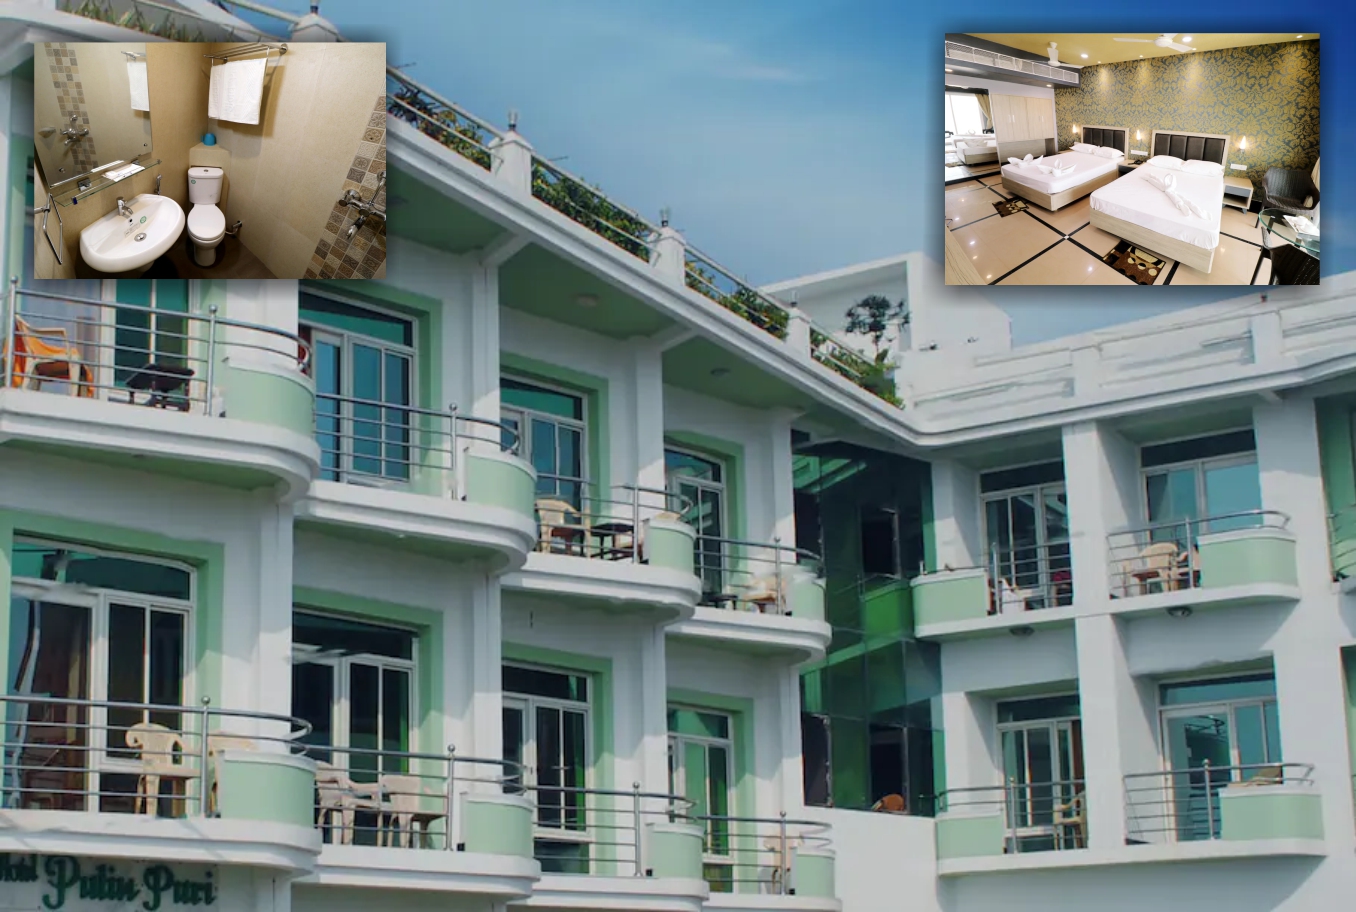 Sukanya Hotel Puri, Rooms, Rates, Photos, Reviews, Deals, Contact No and Map